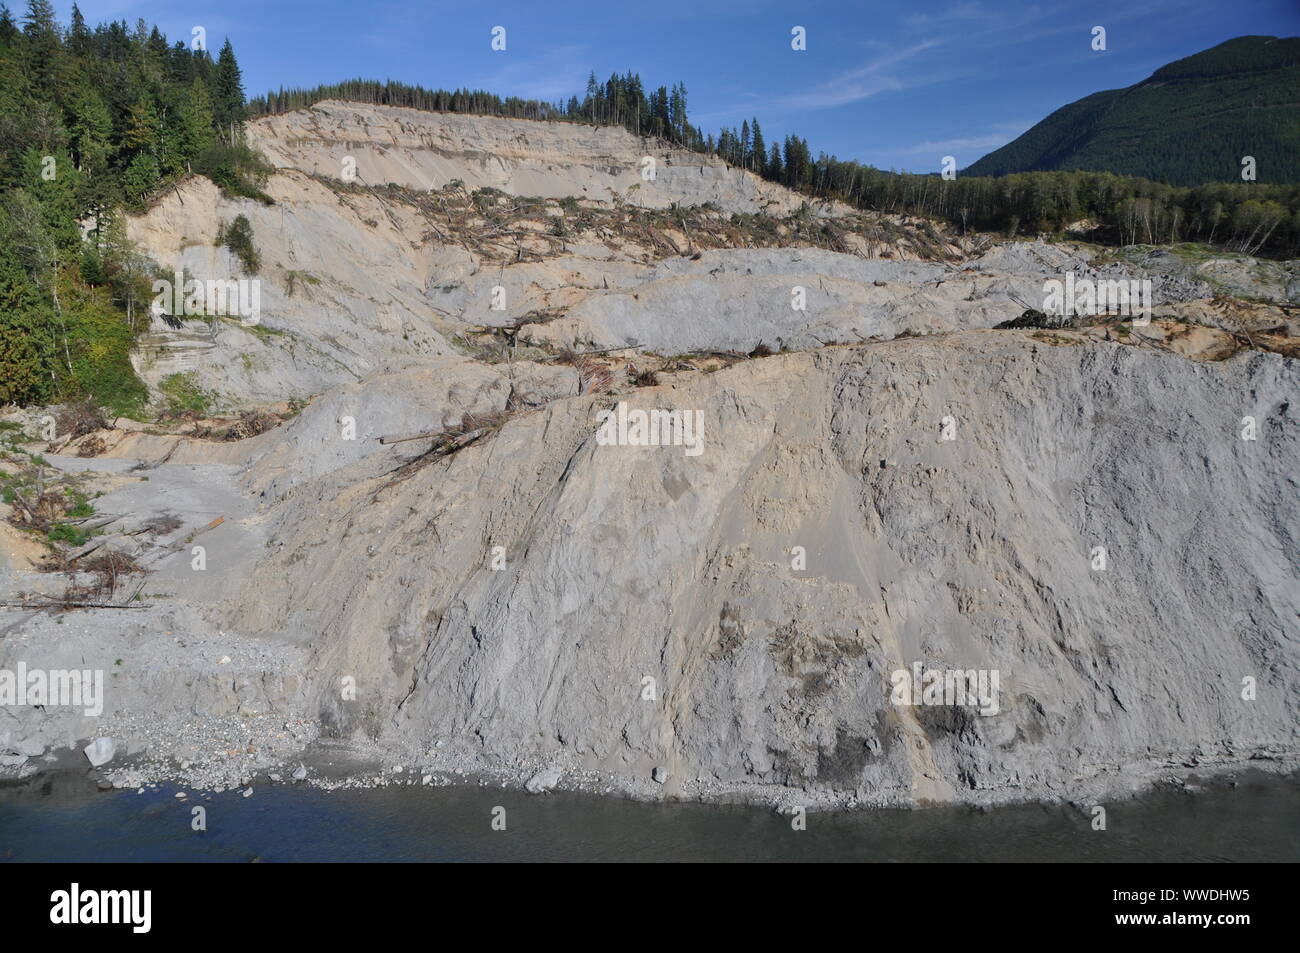 2014 Oso Landslide, Oso Landslide, North Fork Stillaguamish River Valley, Snohomish County, Washington, USA Stock Photo